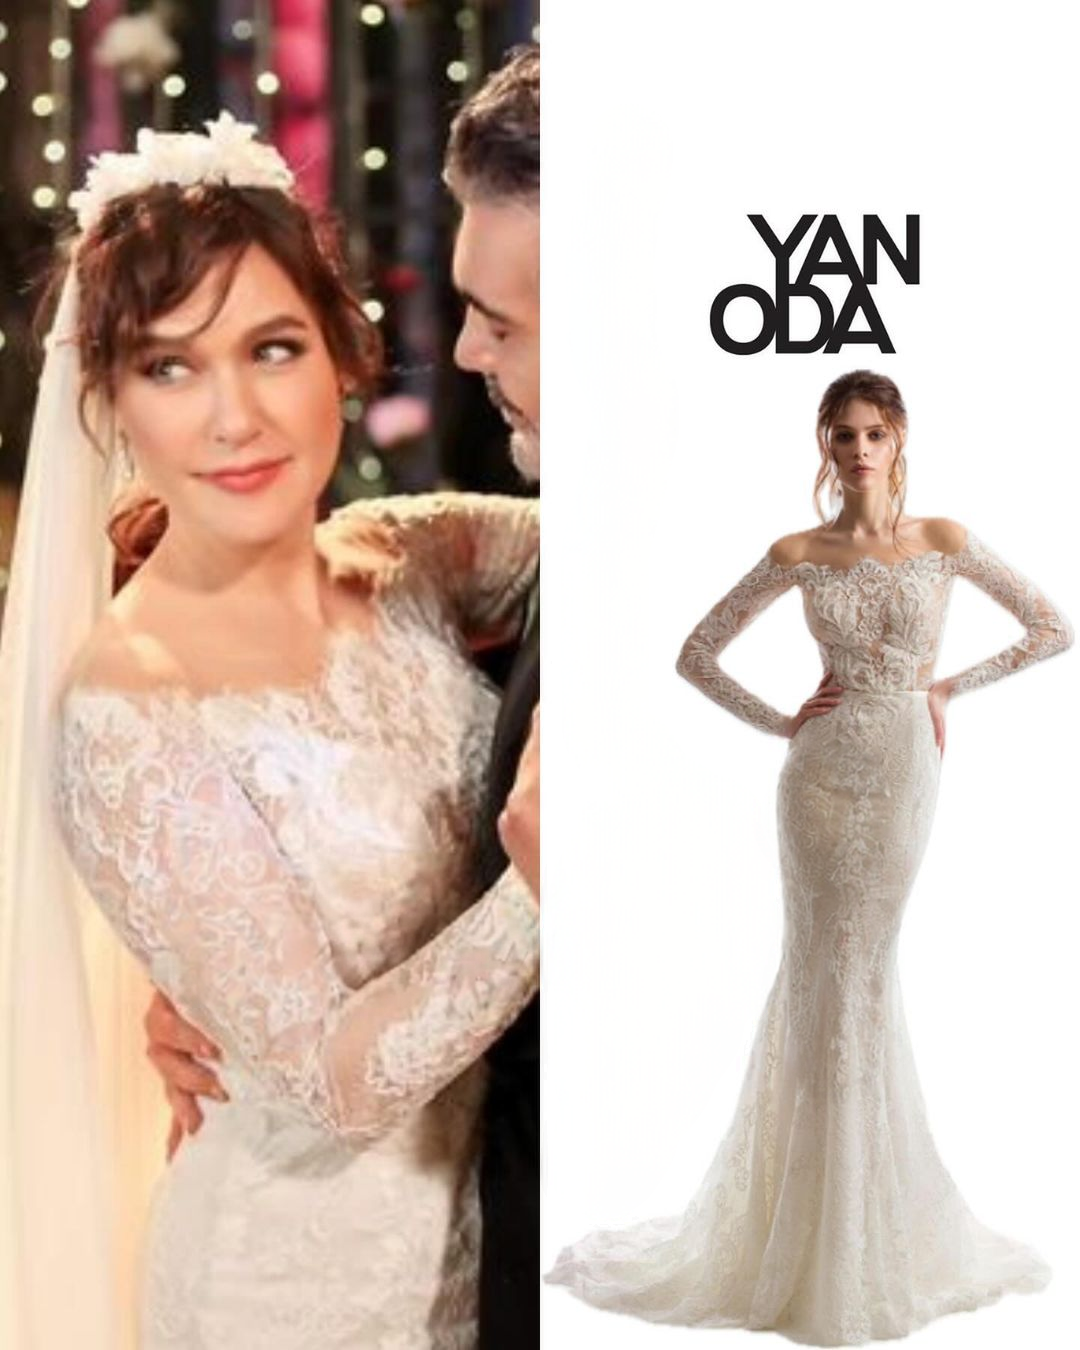 The white wedding dress worn by Şevval Sam